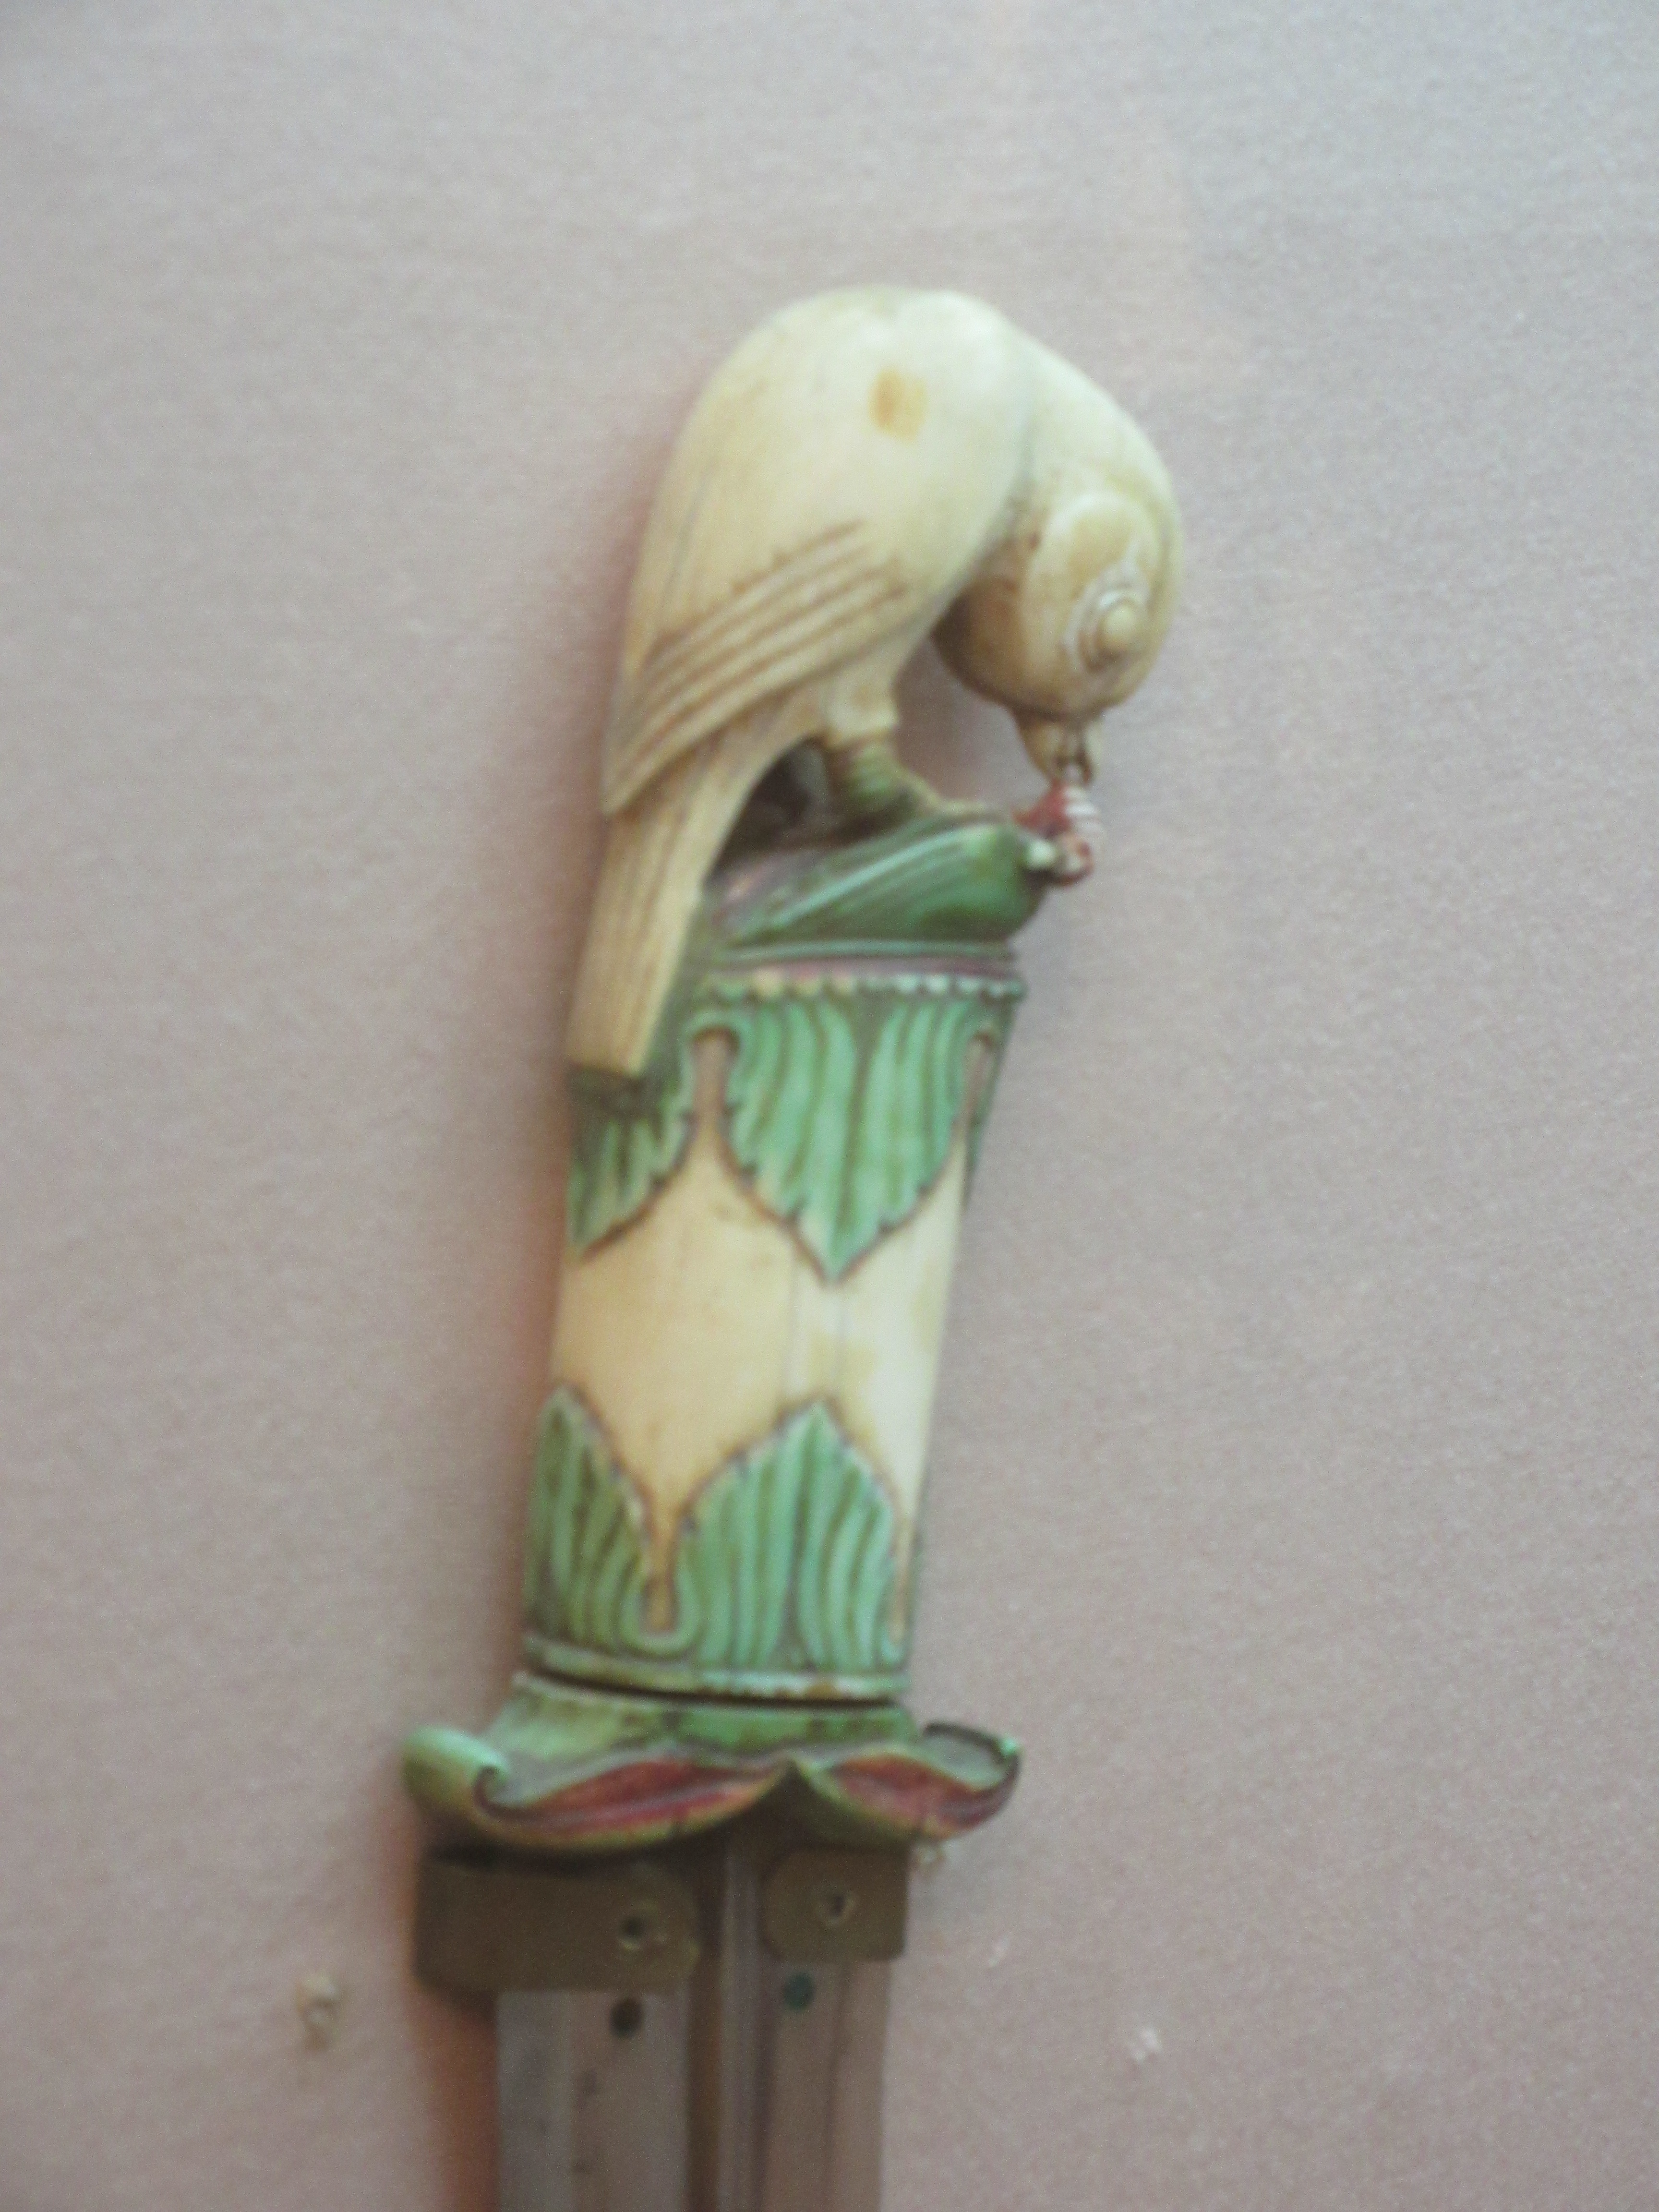 Ivory handle